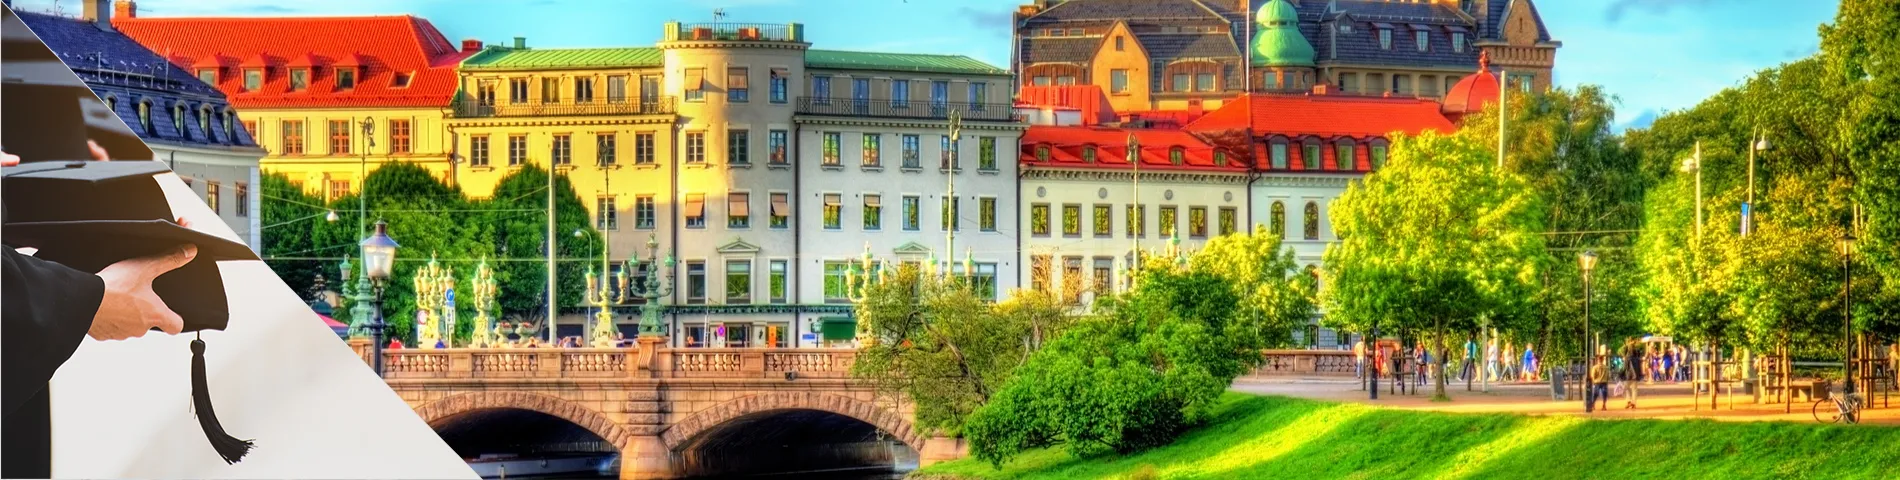 Göteborg - Universitetskurser